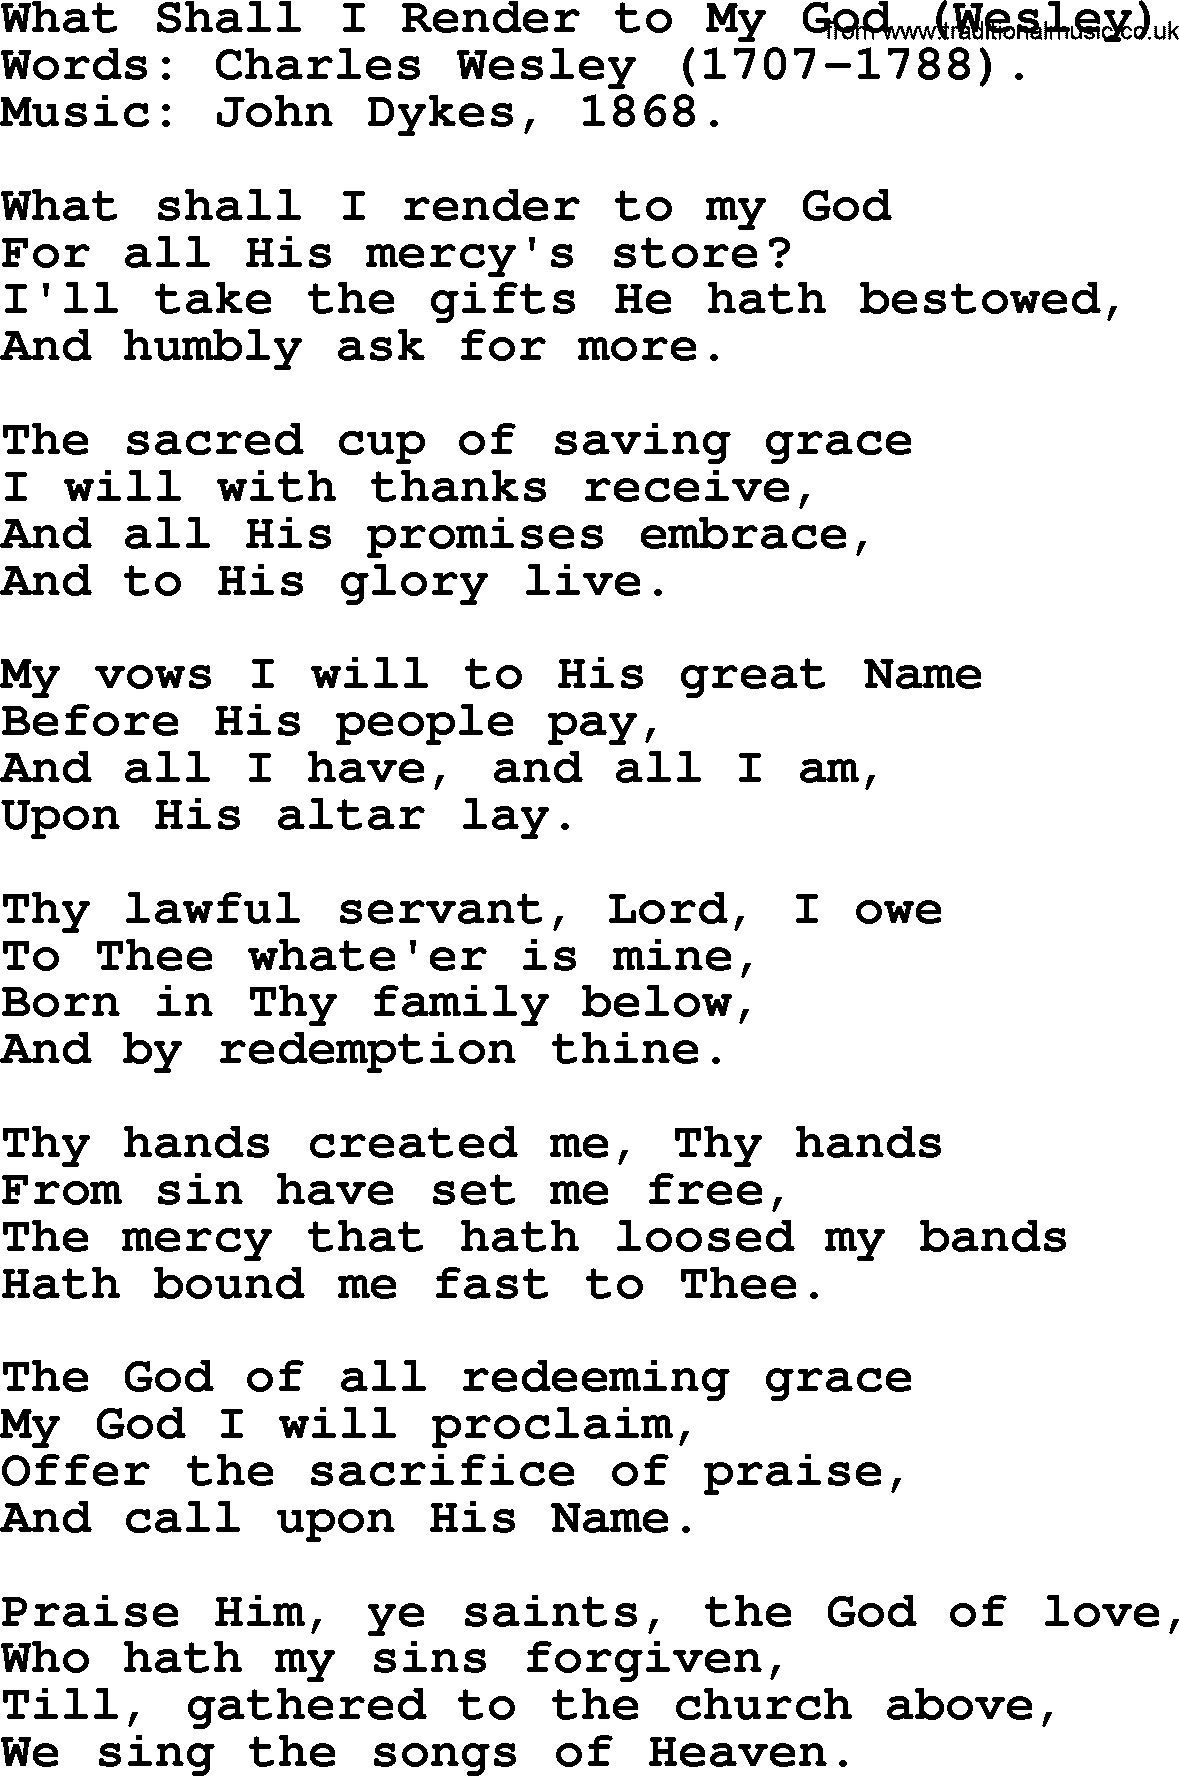 Forgiveness hymns, Hymn: What Shall I Render To My God (Wesley), lyrics with PDF